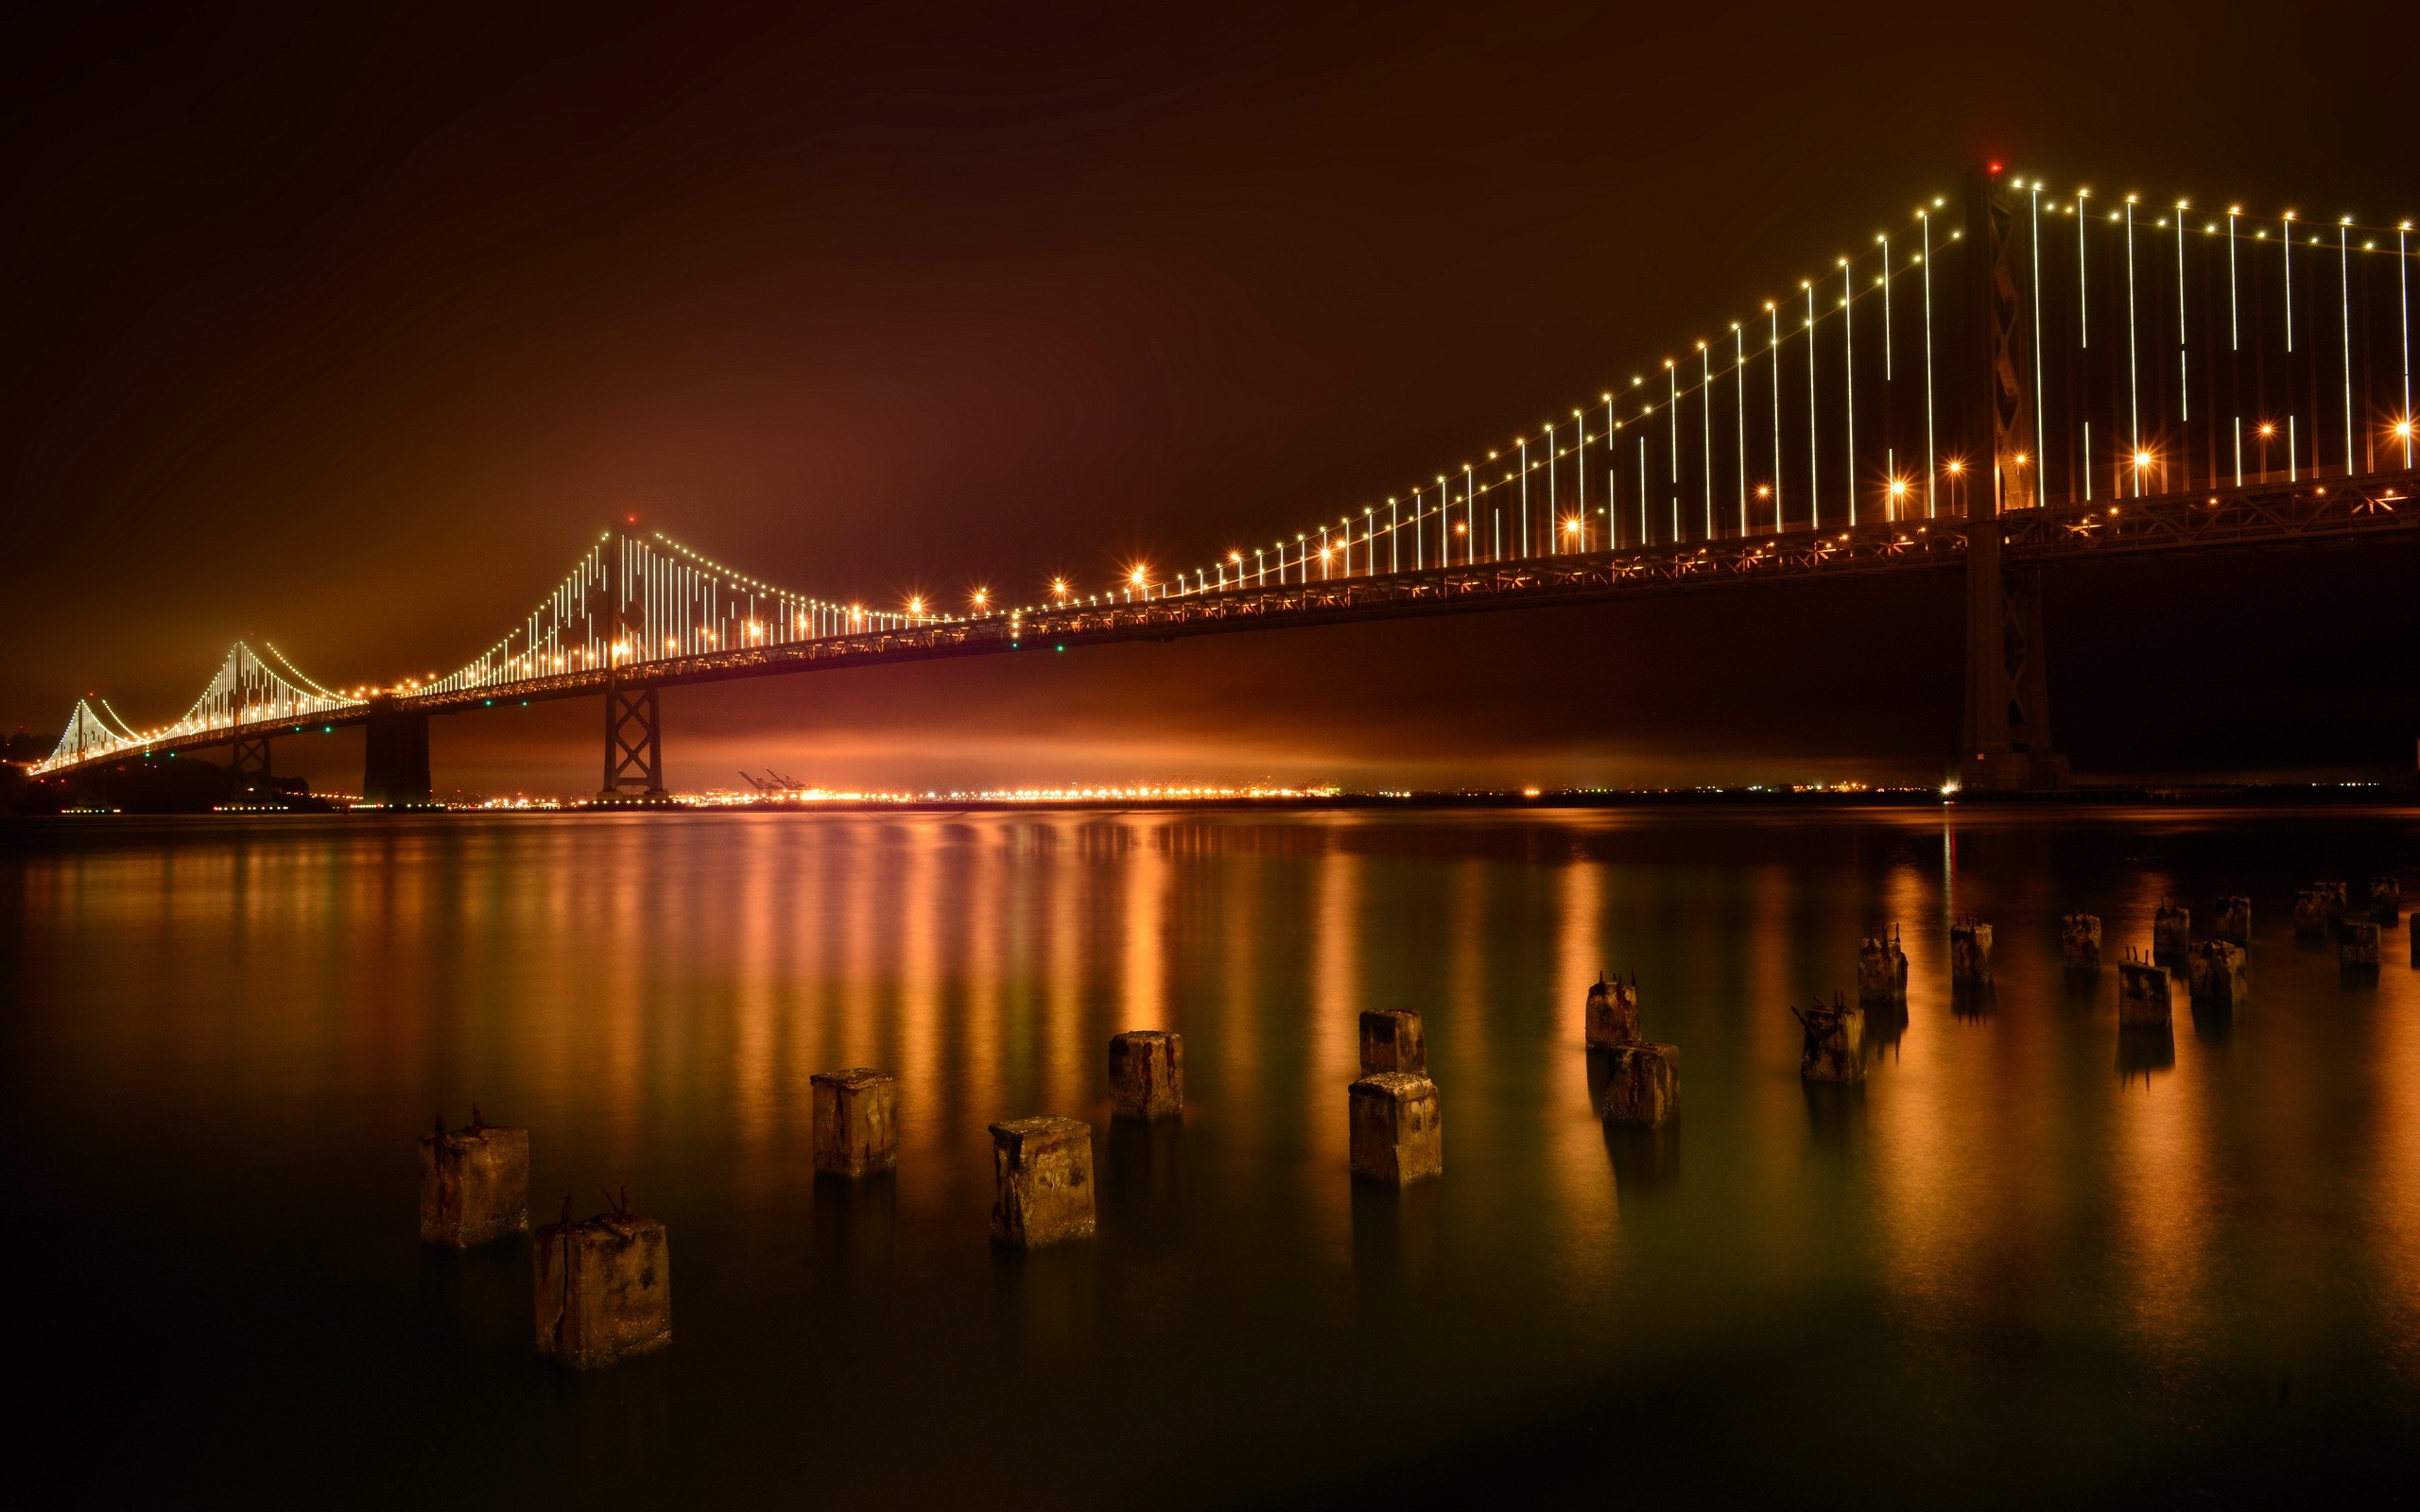 The bridge in San Francisco at night